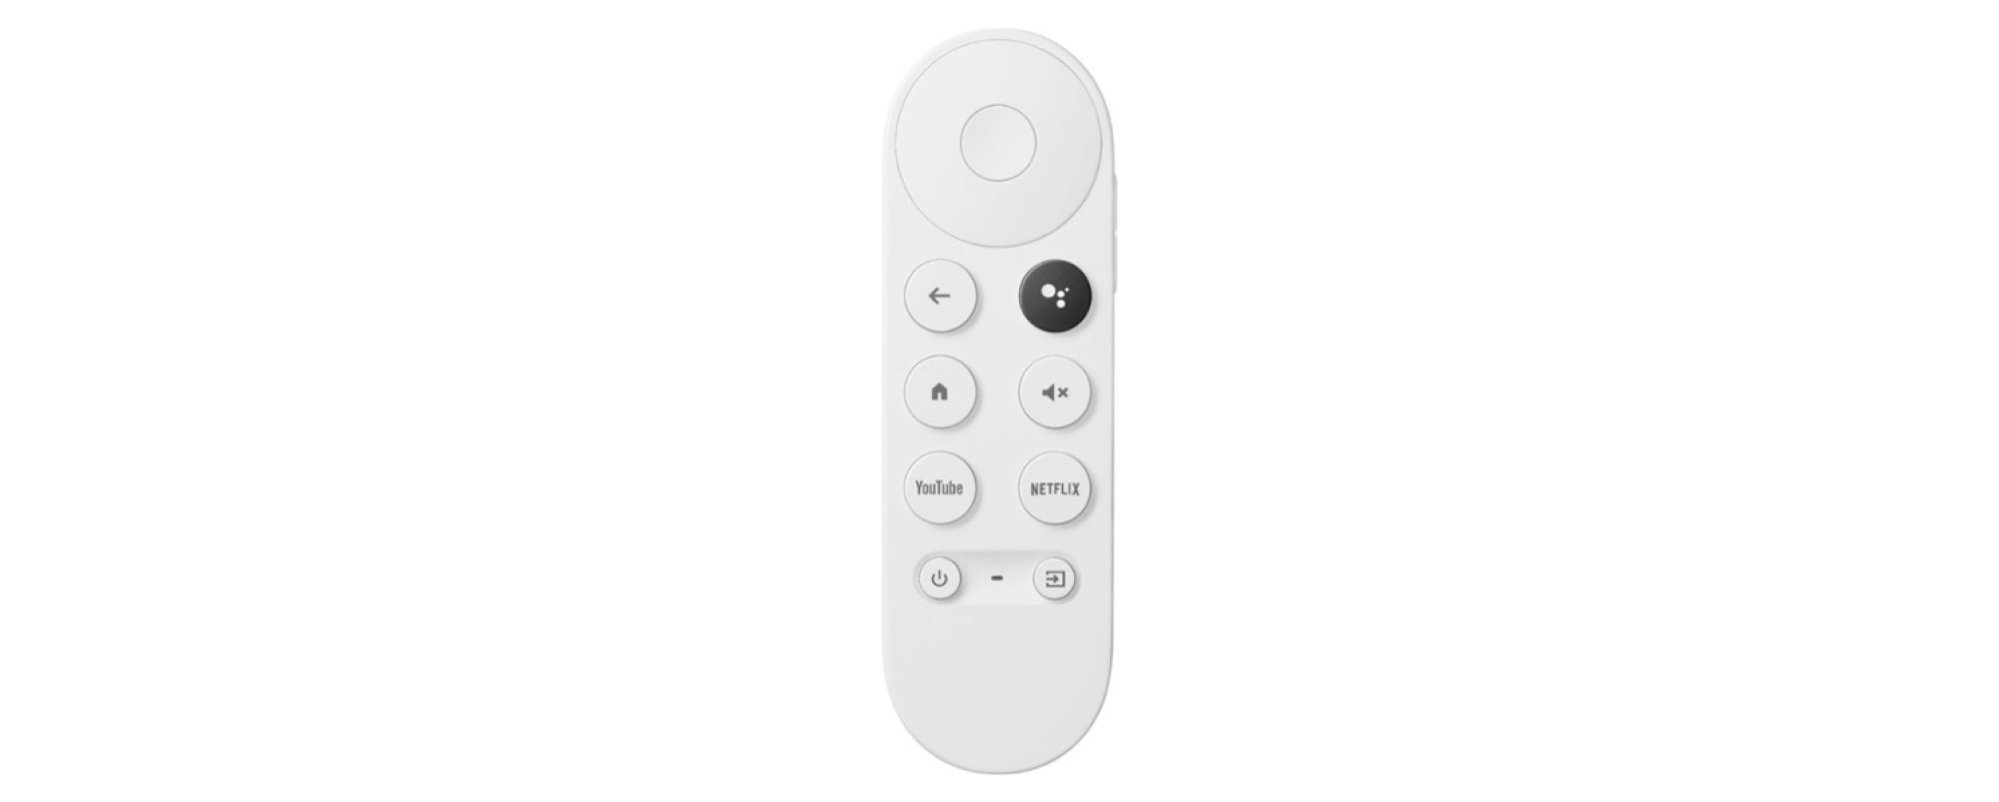 White Google Chromecast Remote